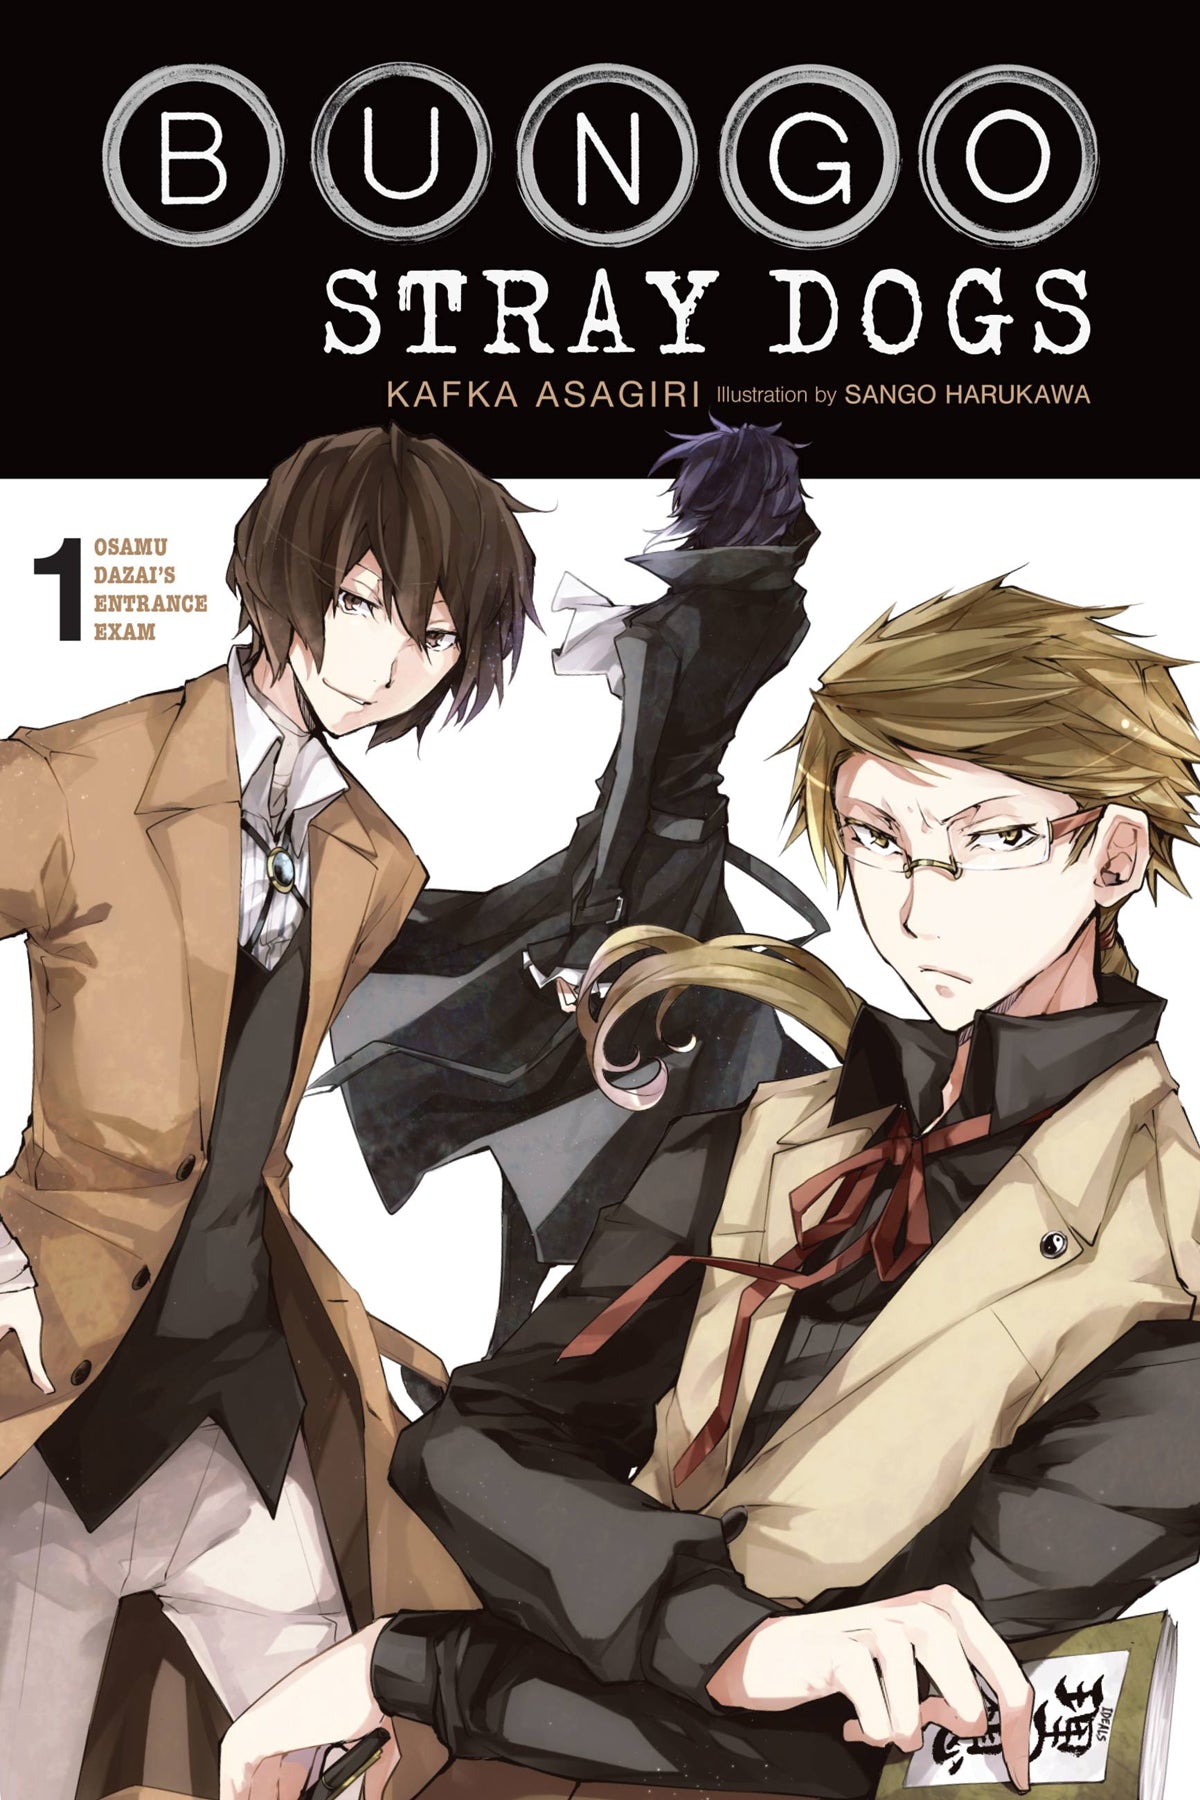 Bungo Stray Dogs Vol. 01 (Light Novel): Osamu Dazai's Entrance Exam